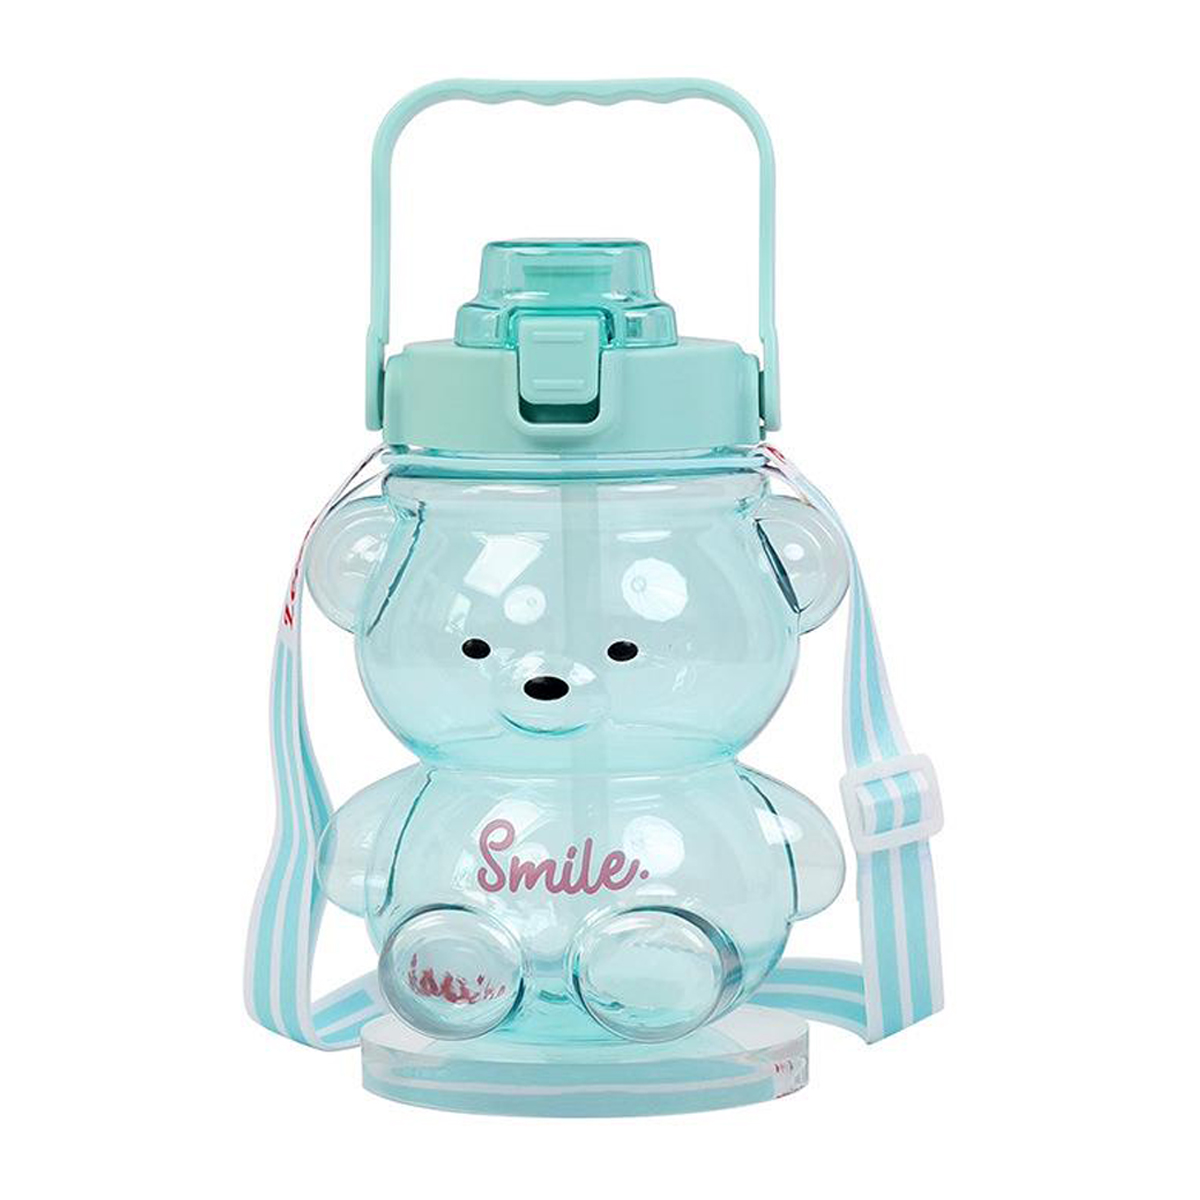 1350ml,bear shaped,water bottle,clear color